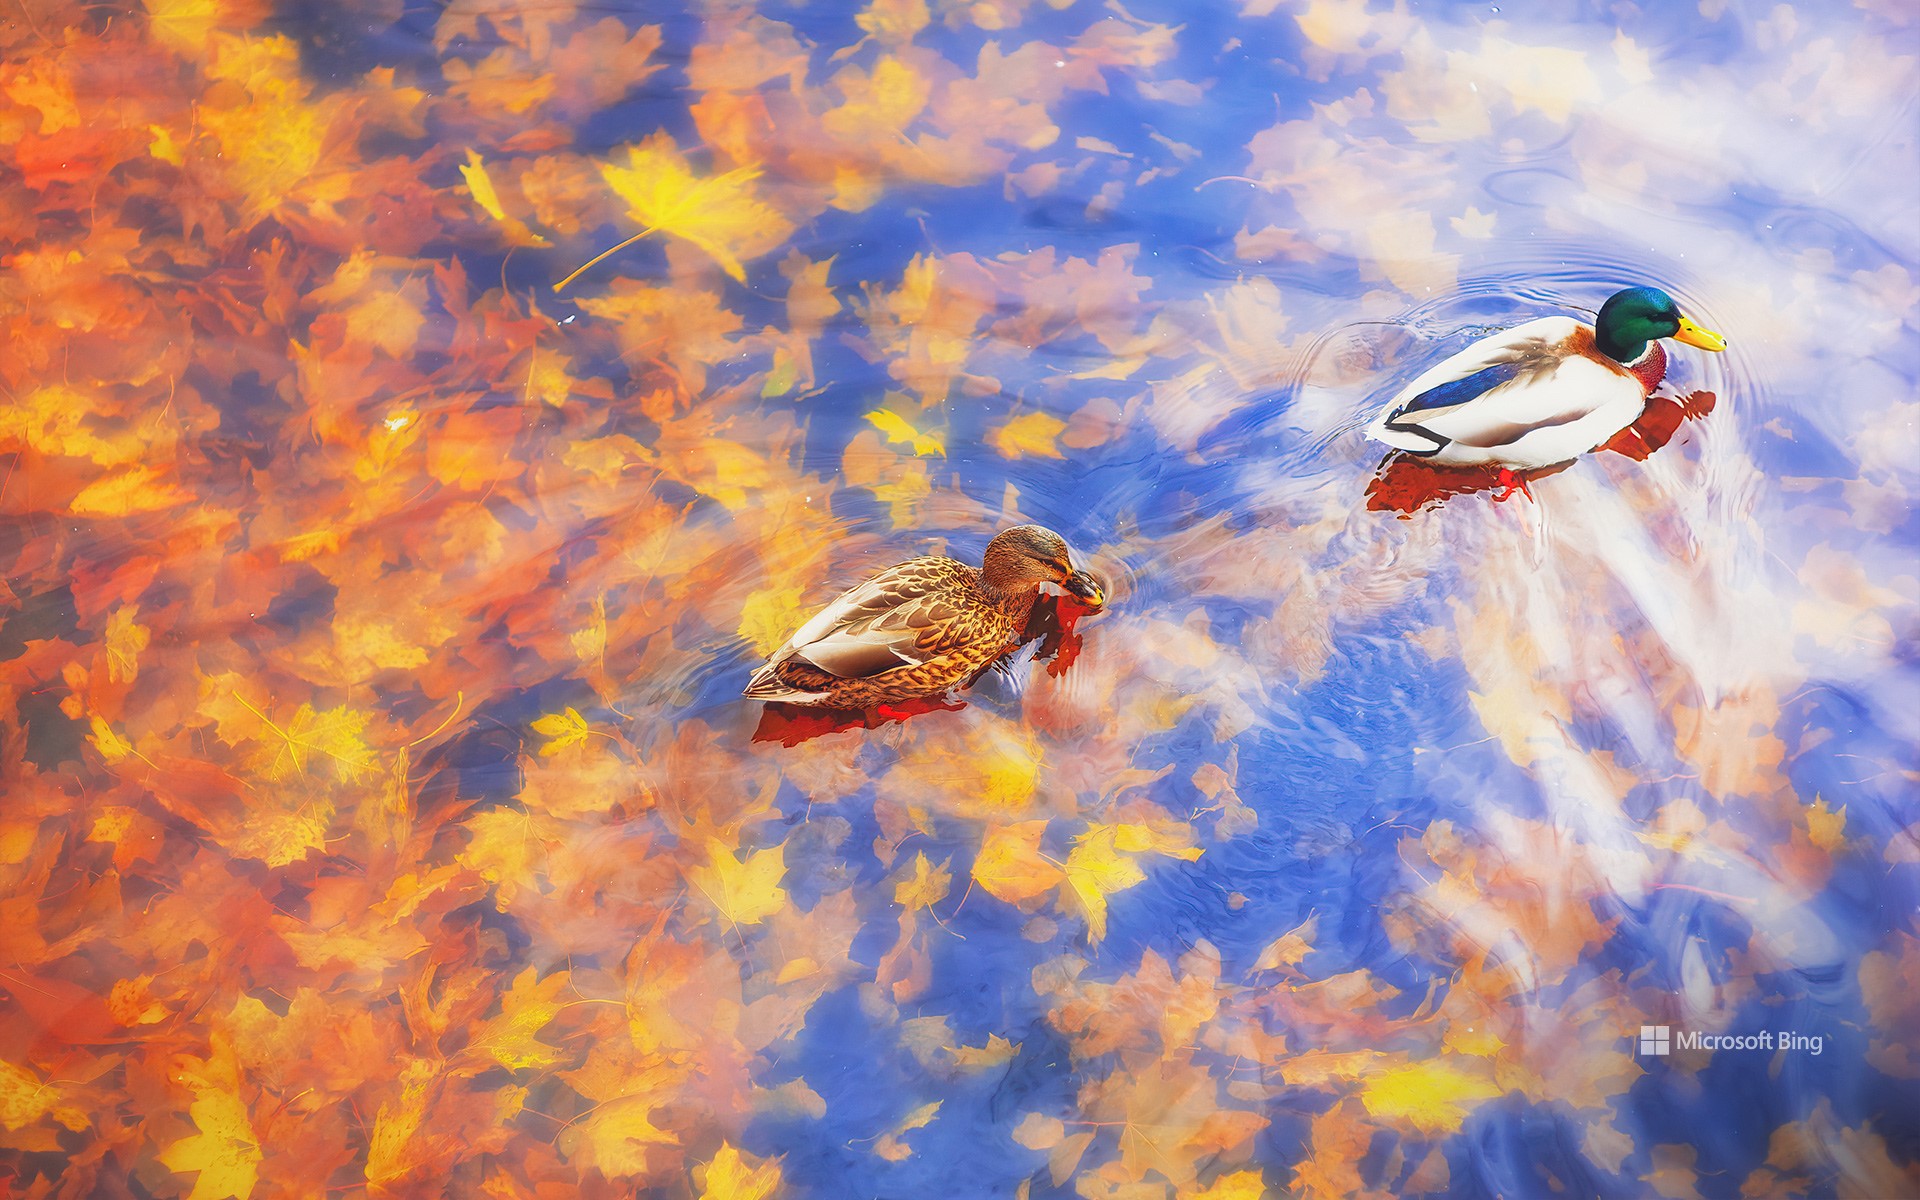 Two mallard ducks on a pond in autumn